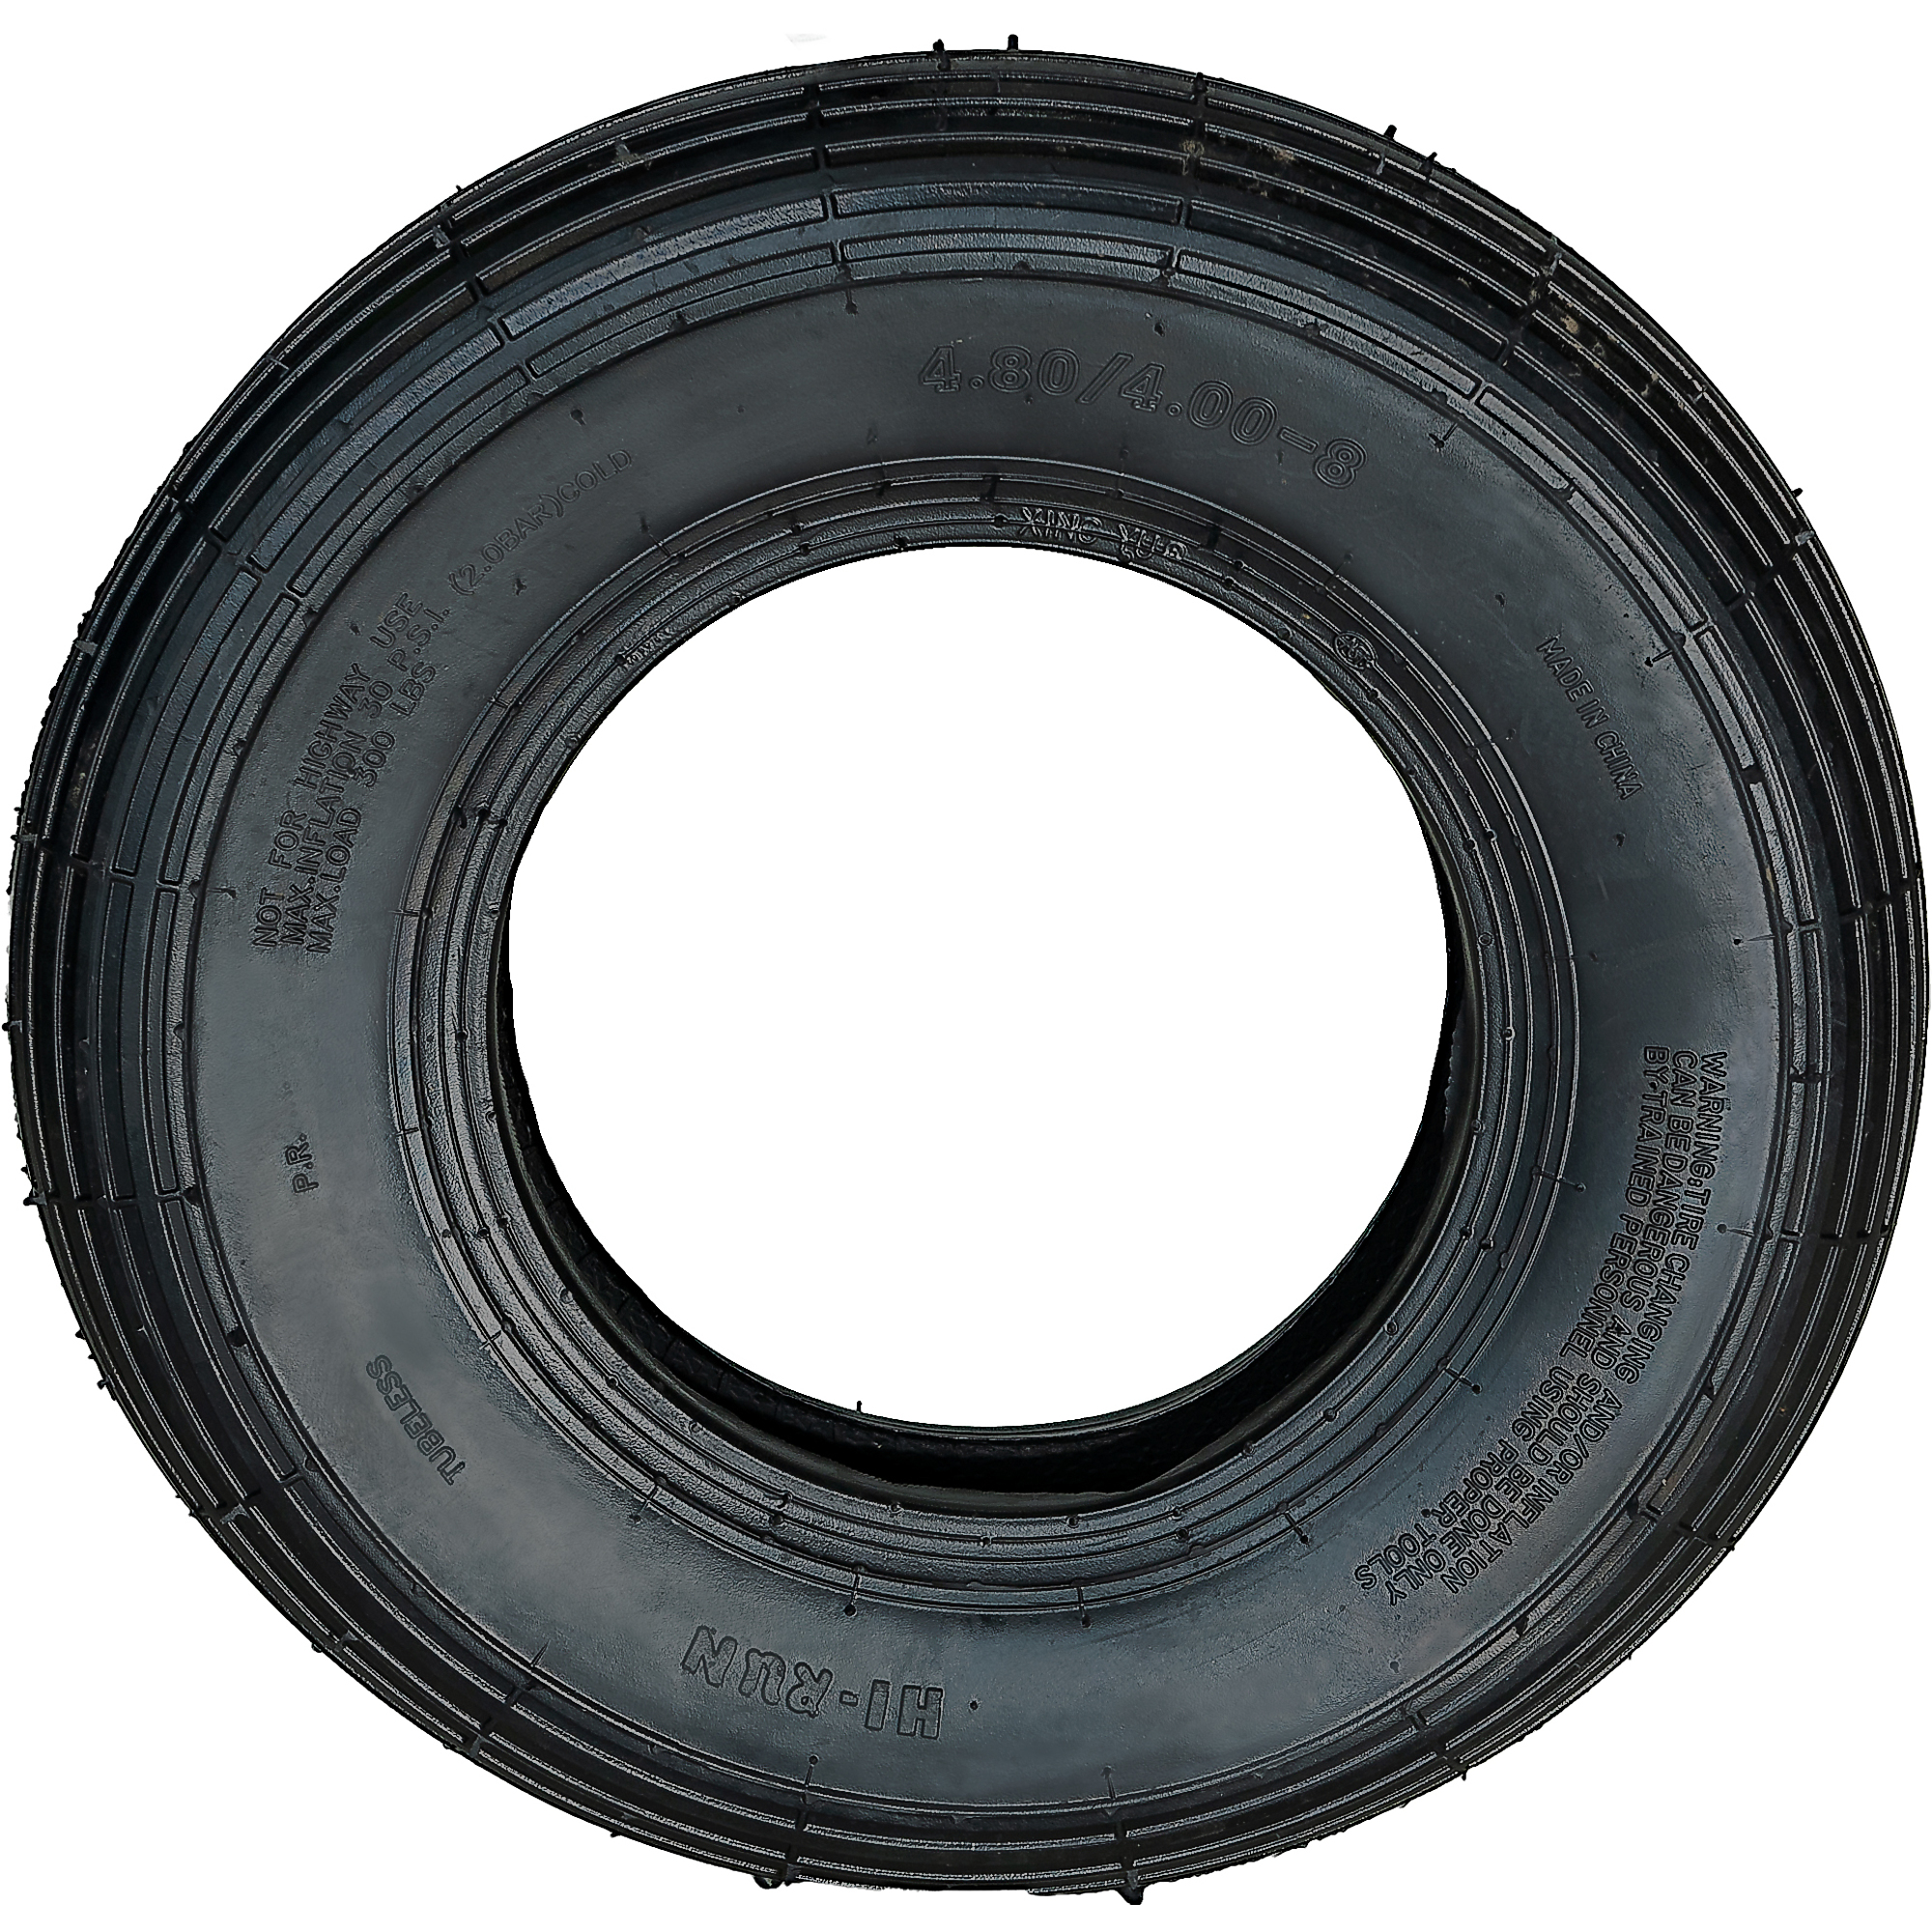 HI-RUN, Wheel Barrow Tire, 4 ply, Rib, Tire Size 4.80/4.00-8, Load